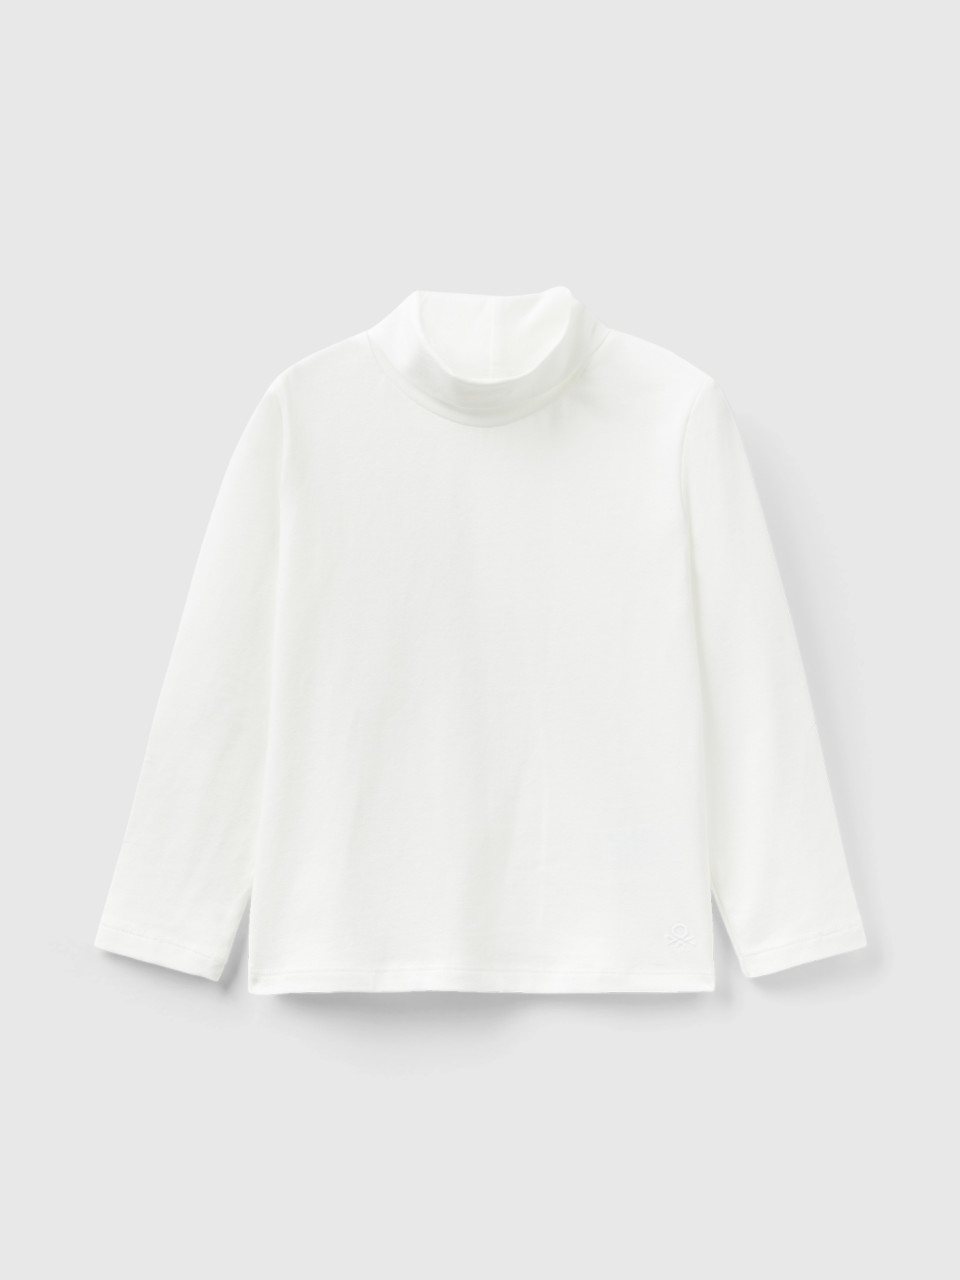 Benetton, Turtleneck T-shirt In Stretch Cotton, Creamy White, Kids